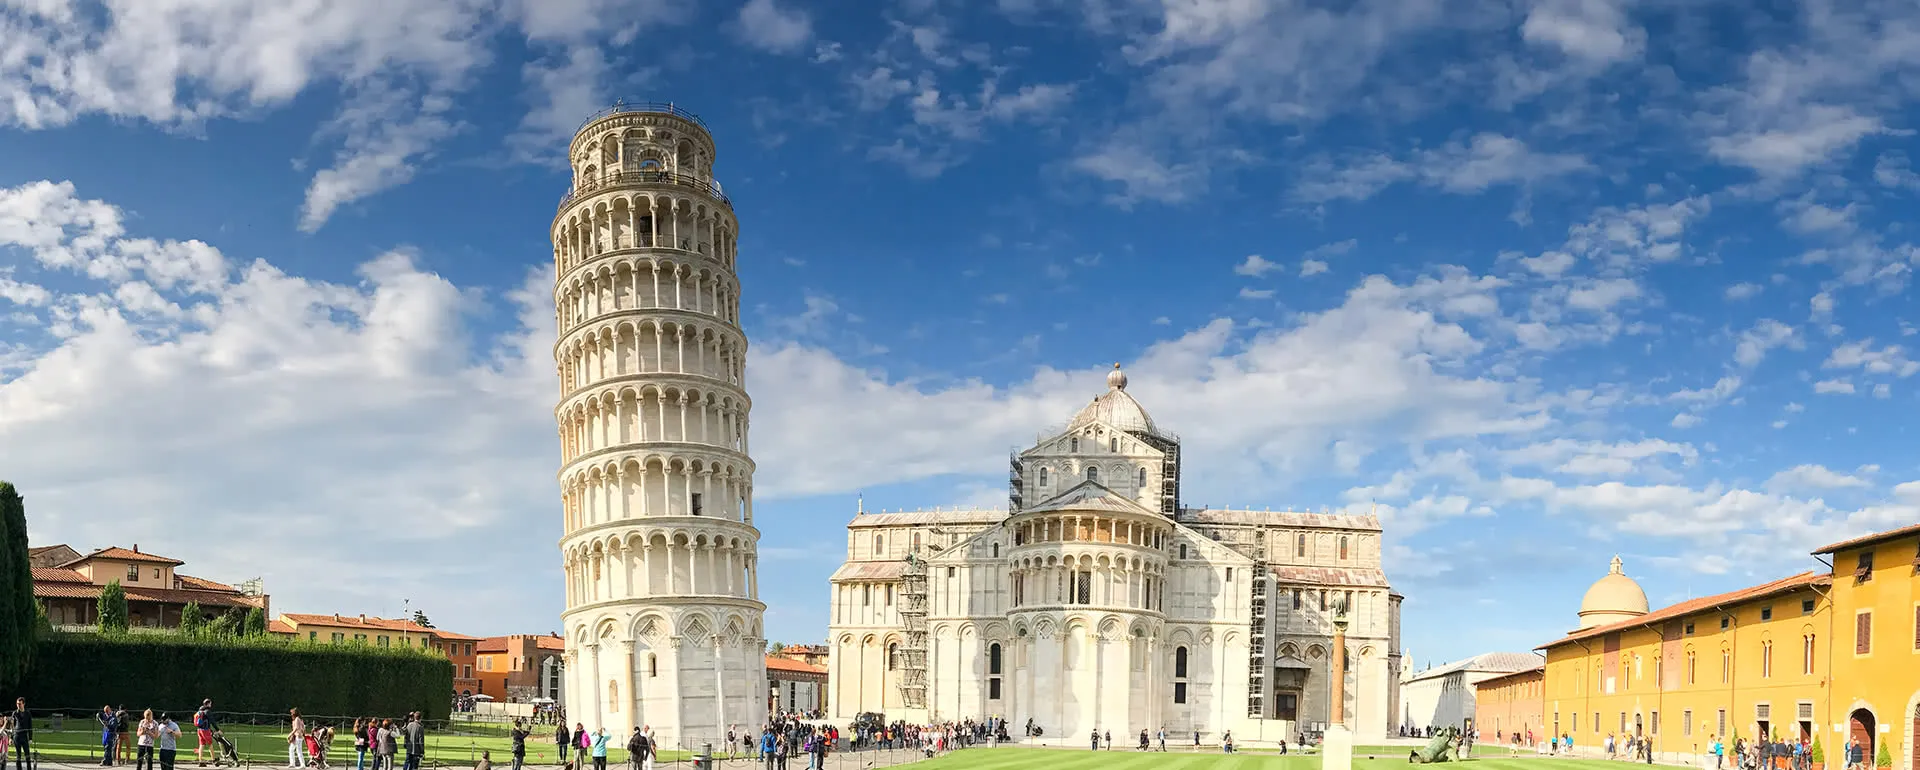 Pisa - the destination for school trips